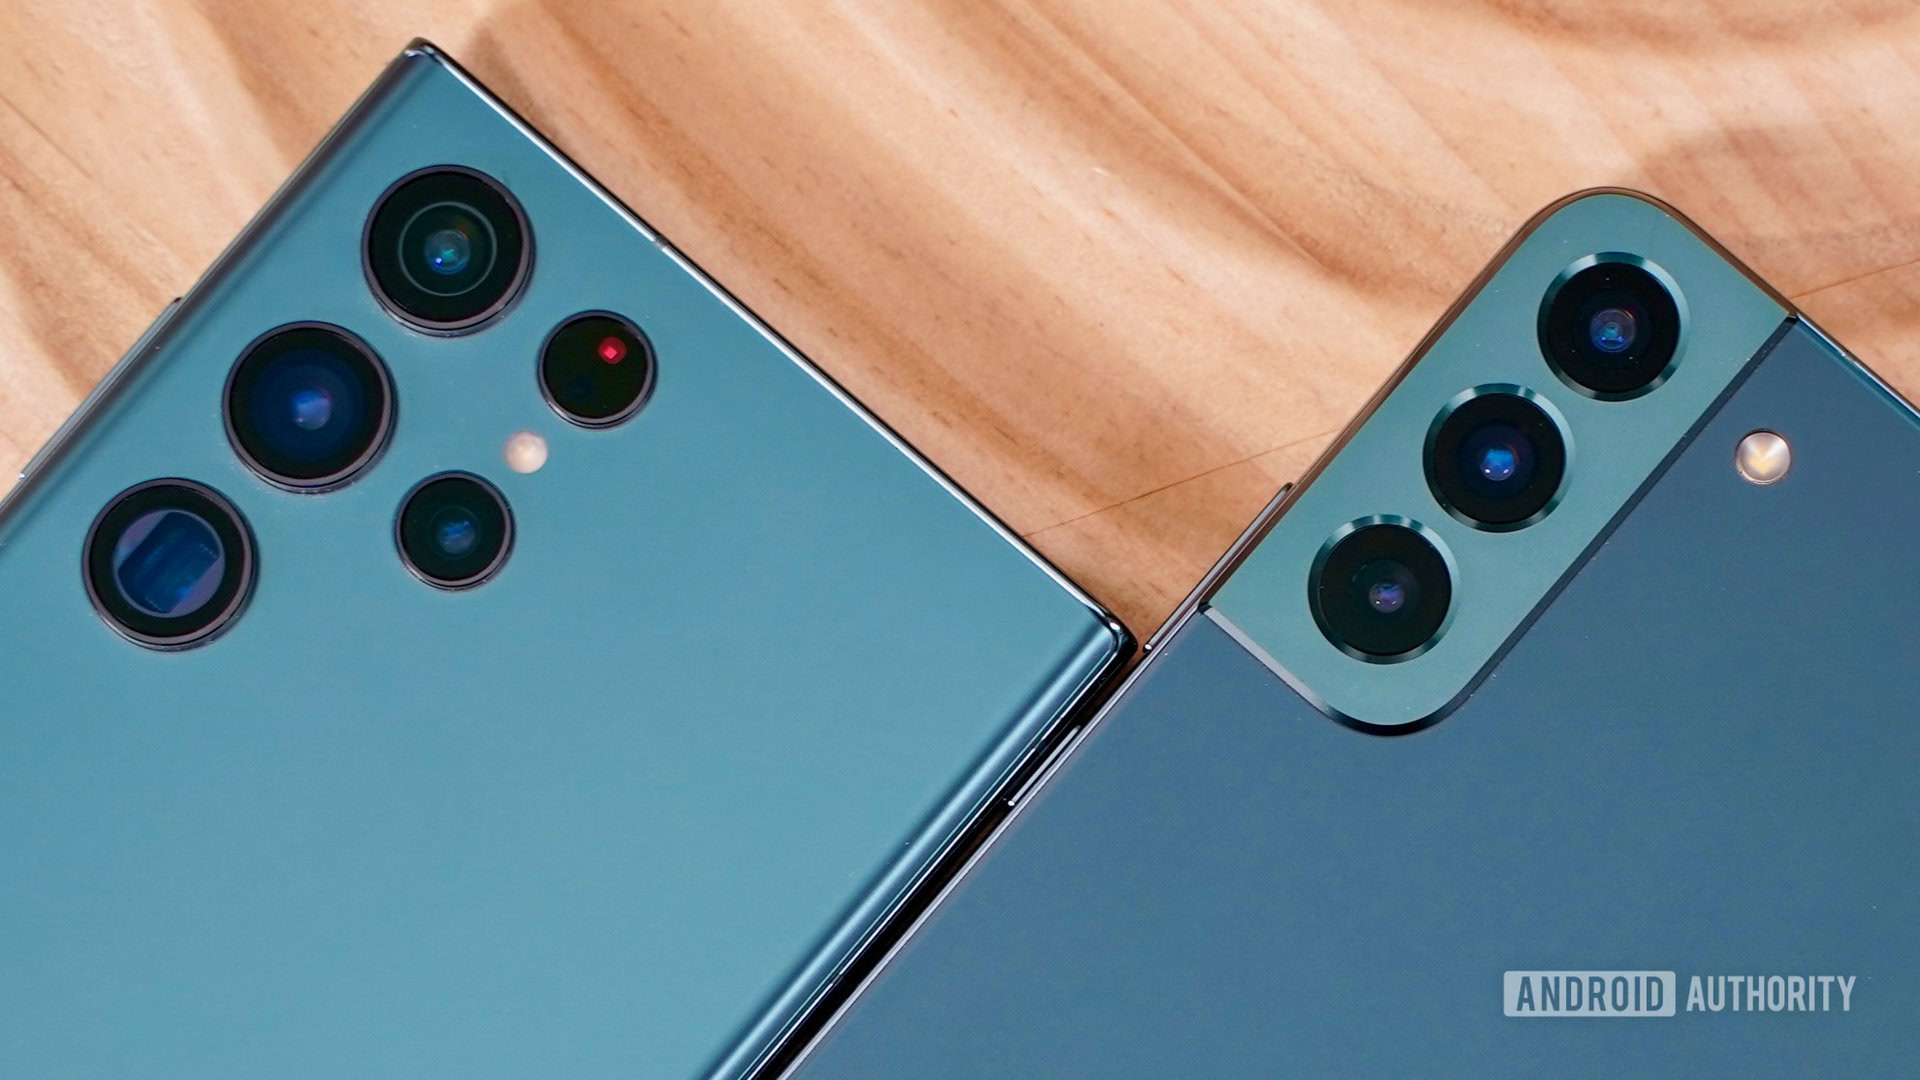 Samsung Galaxy S22 Ultra in Green vs Galaxy S22 Plus in Green showing camera module — best Snapdragon 8 Gen 1 phones.